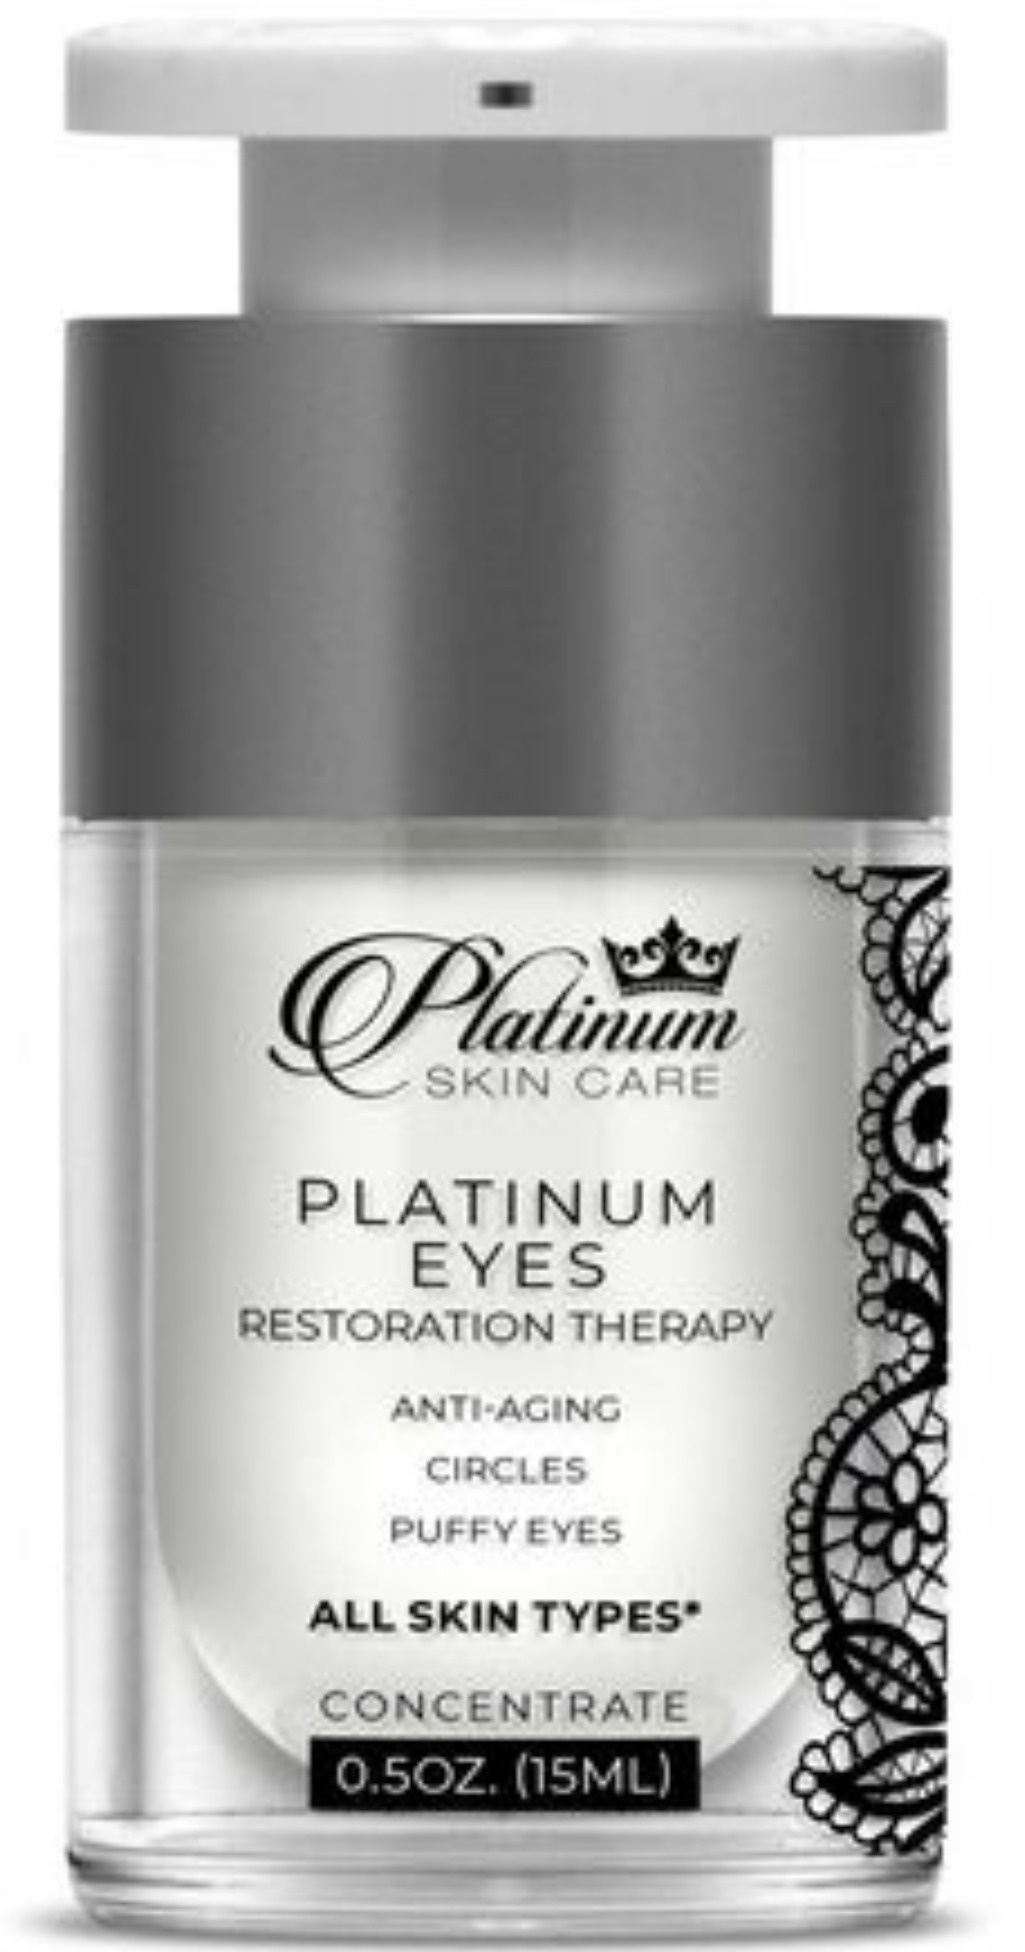 Platinum Skin Care Platinum Eyes Restoration Therapy